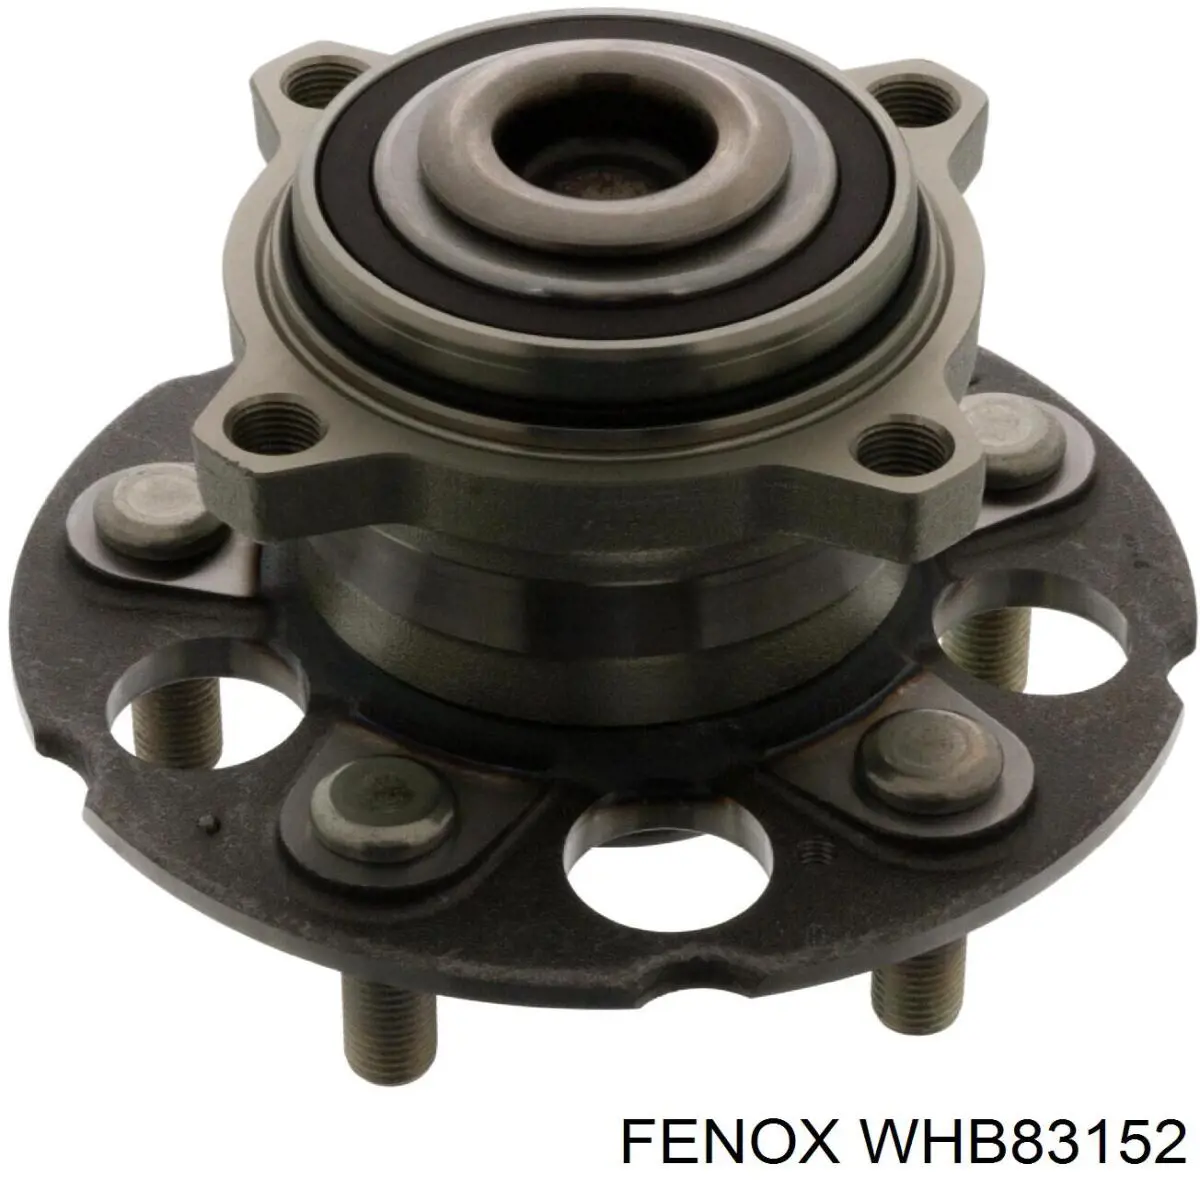 WHB83152 Fenox ступица задняя